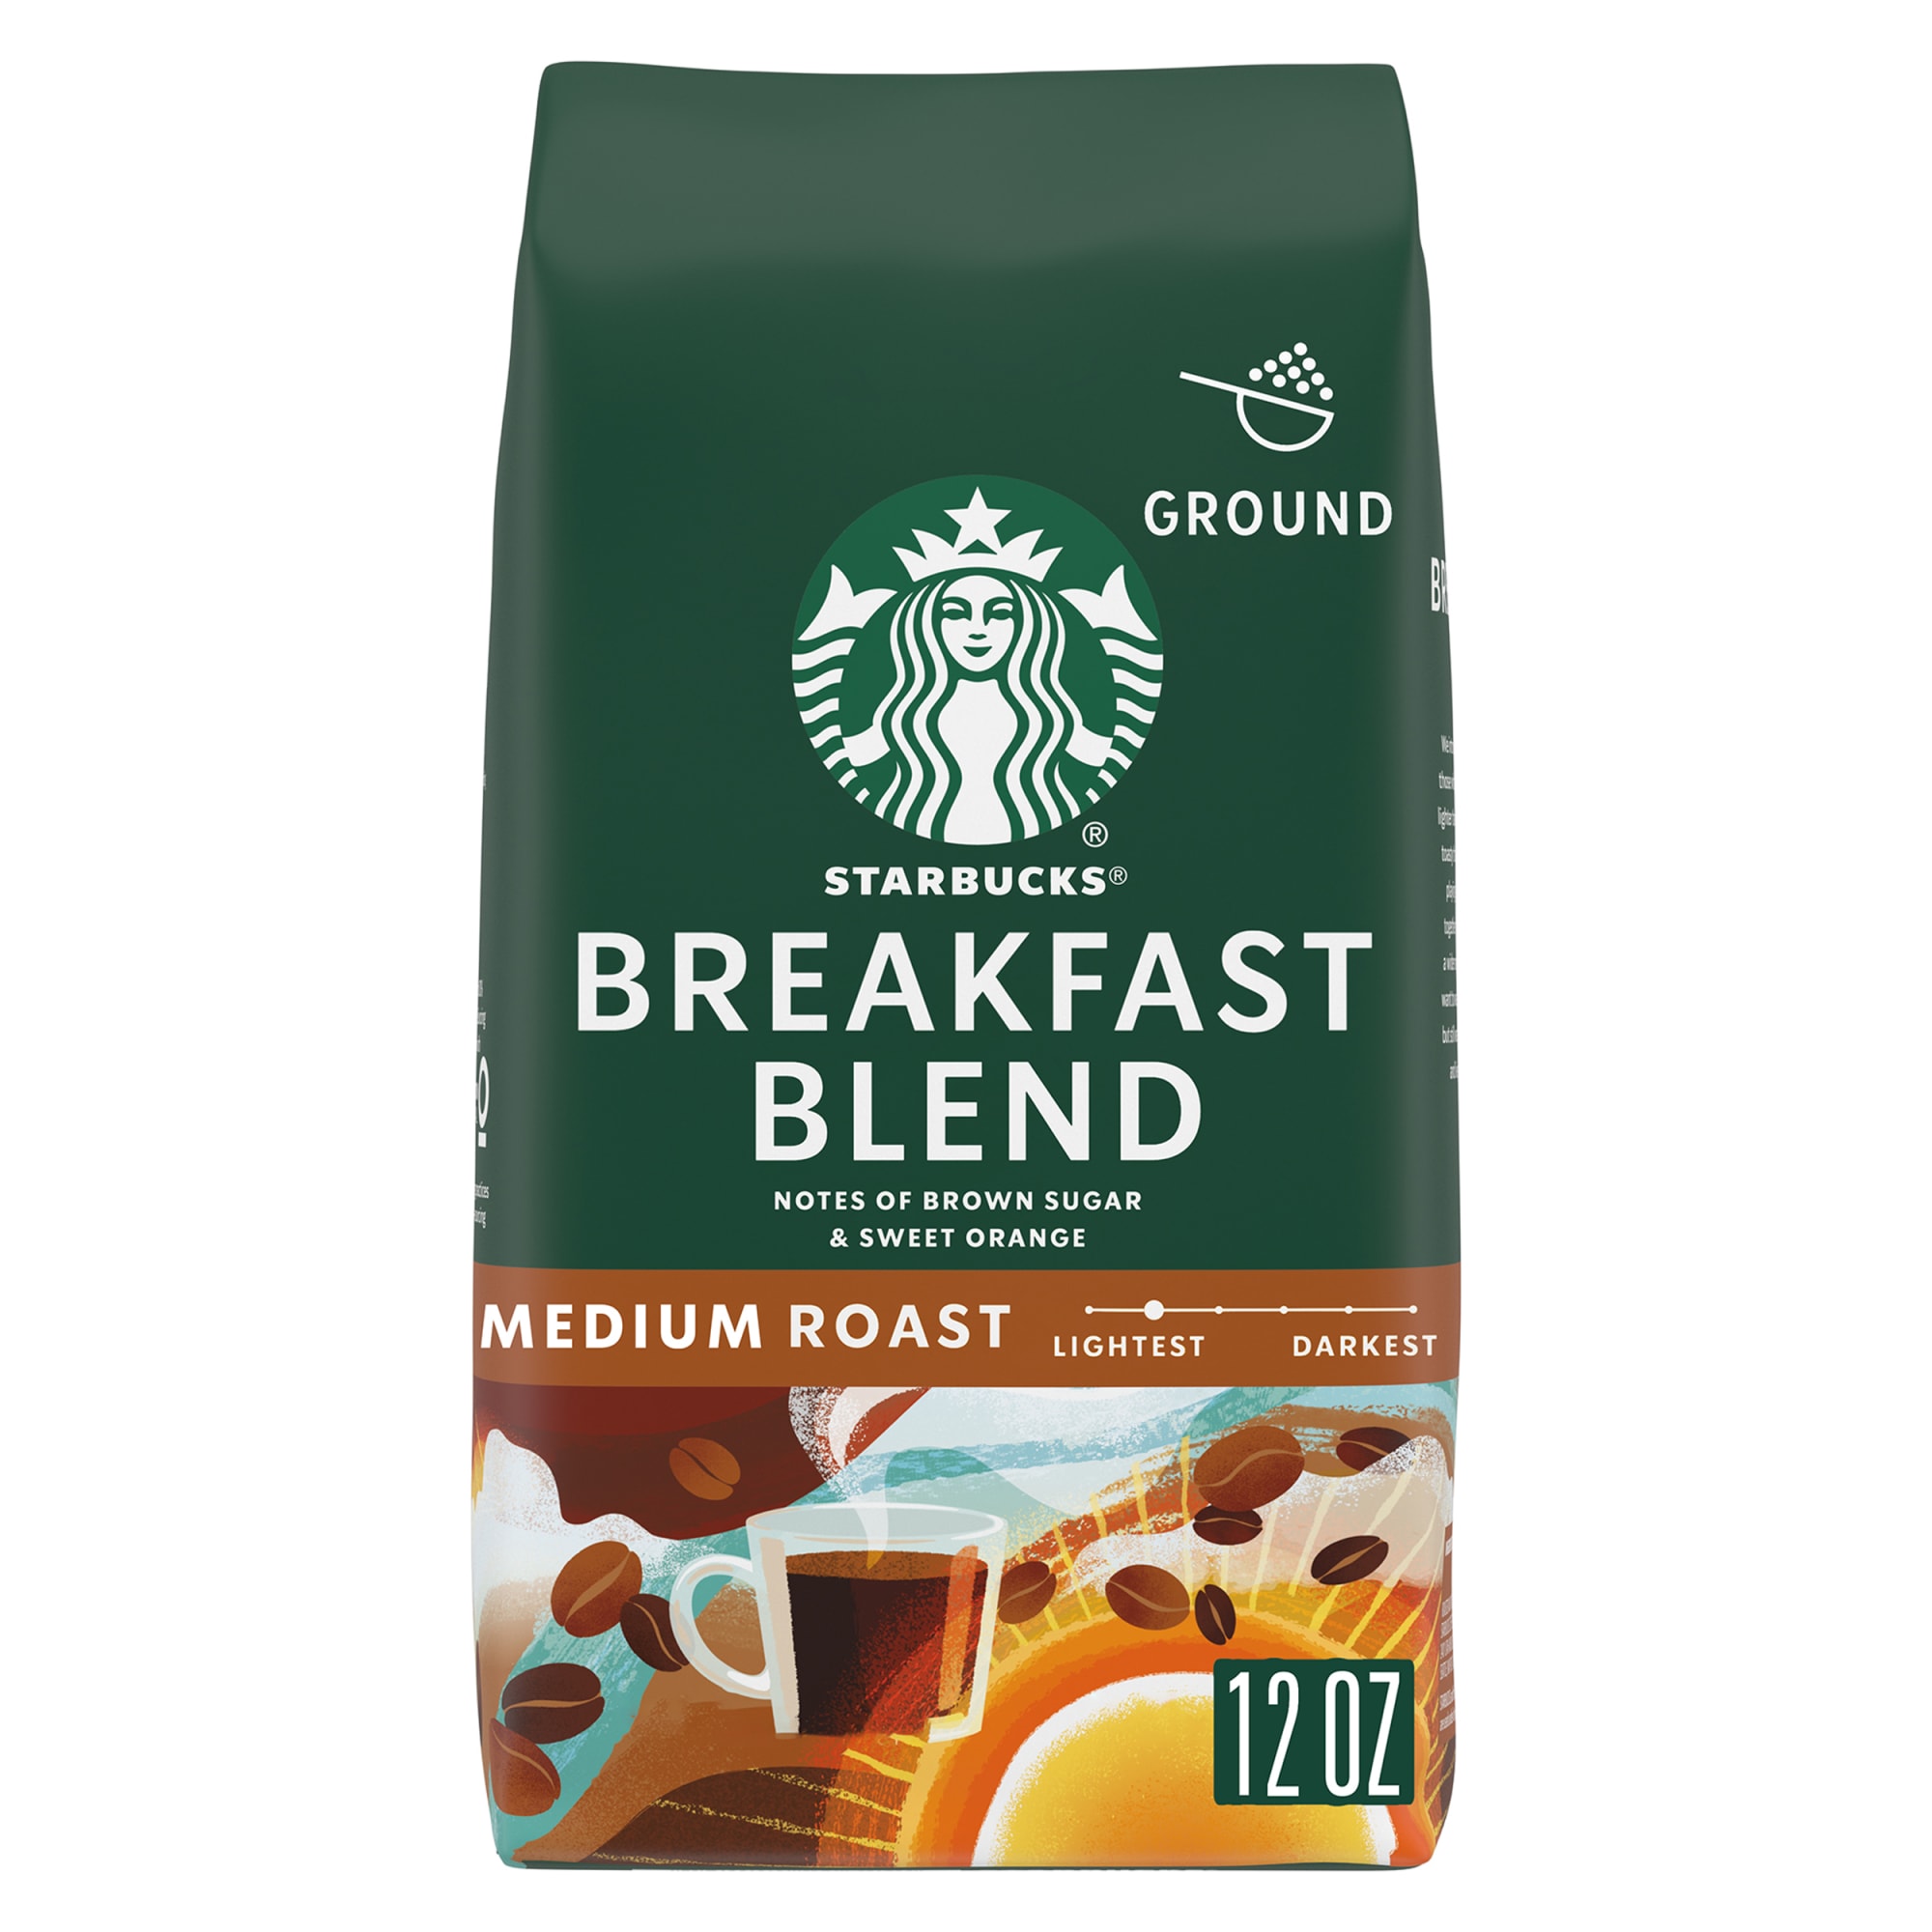 Starbucks Arabica Beans Breakfast Blend, Medium Roast Ground Coffee, 12 oz - image 1 of 7